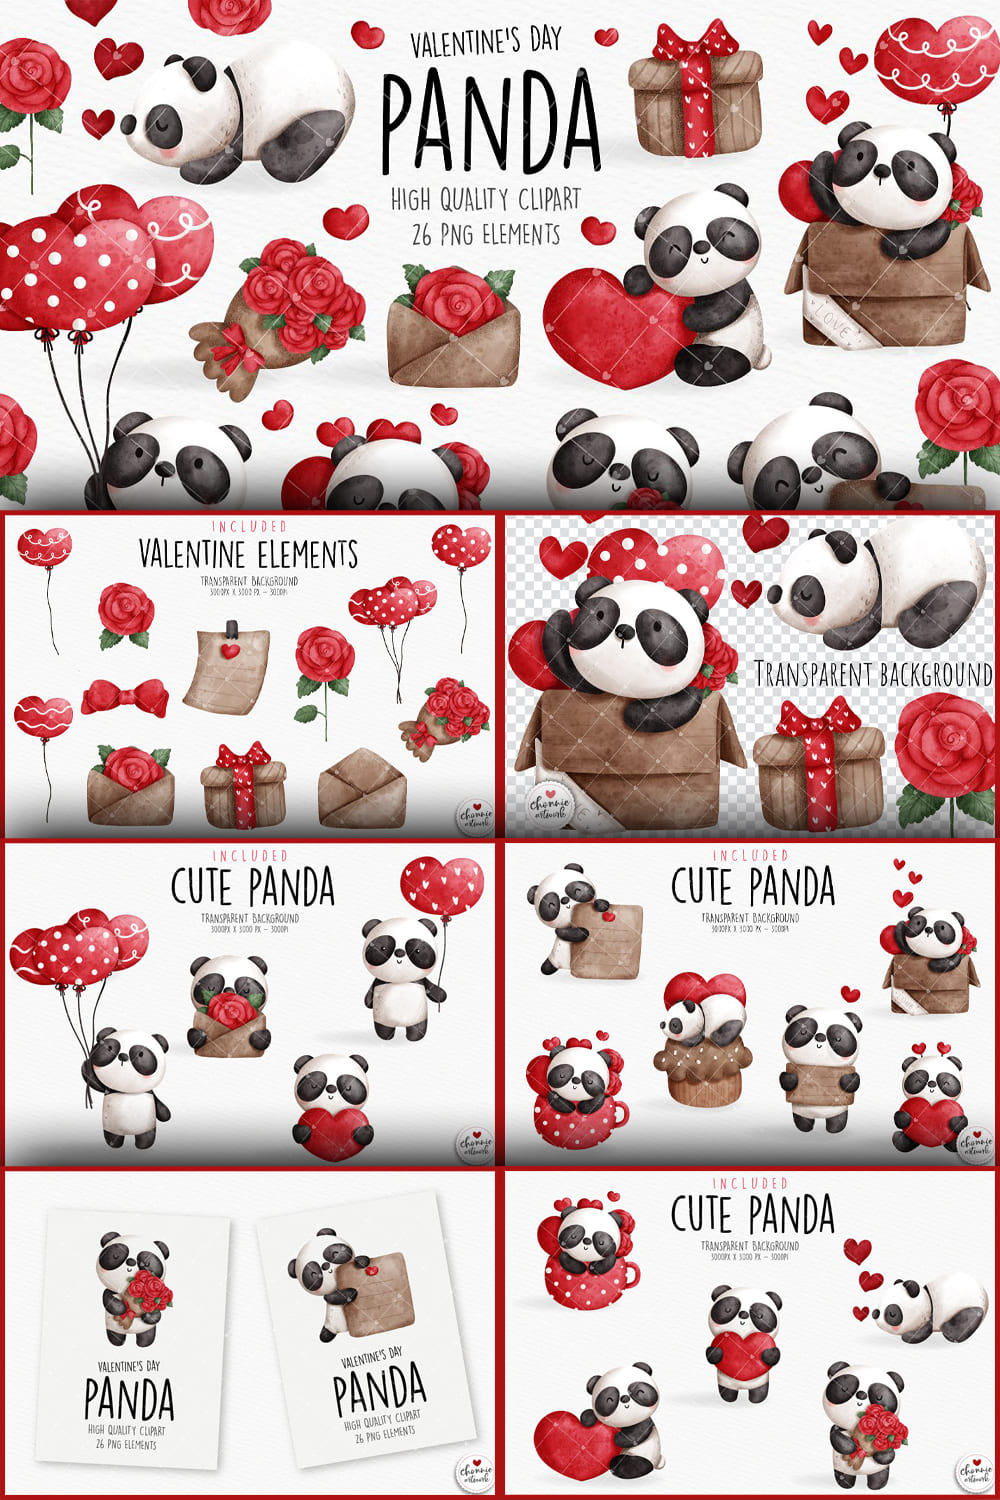 Valentine's Panda Clipart - pinterest image preview.